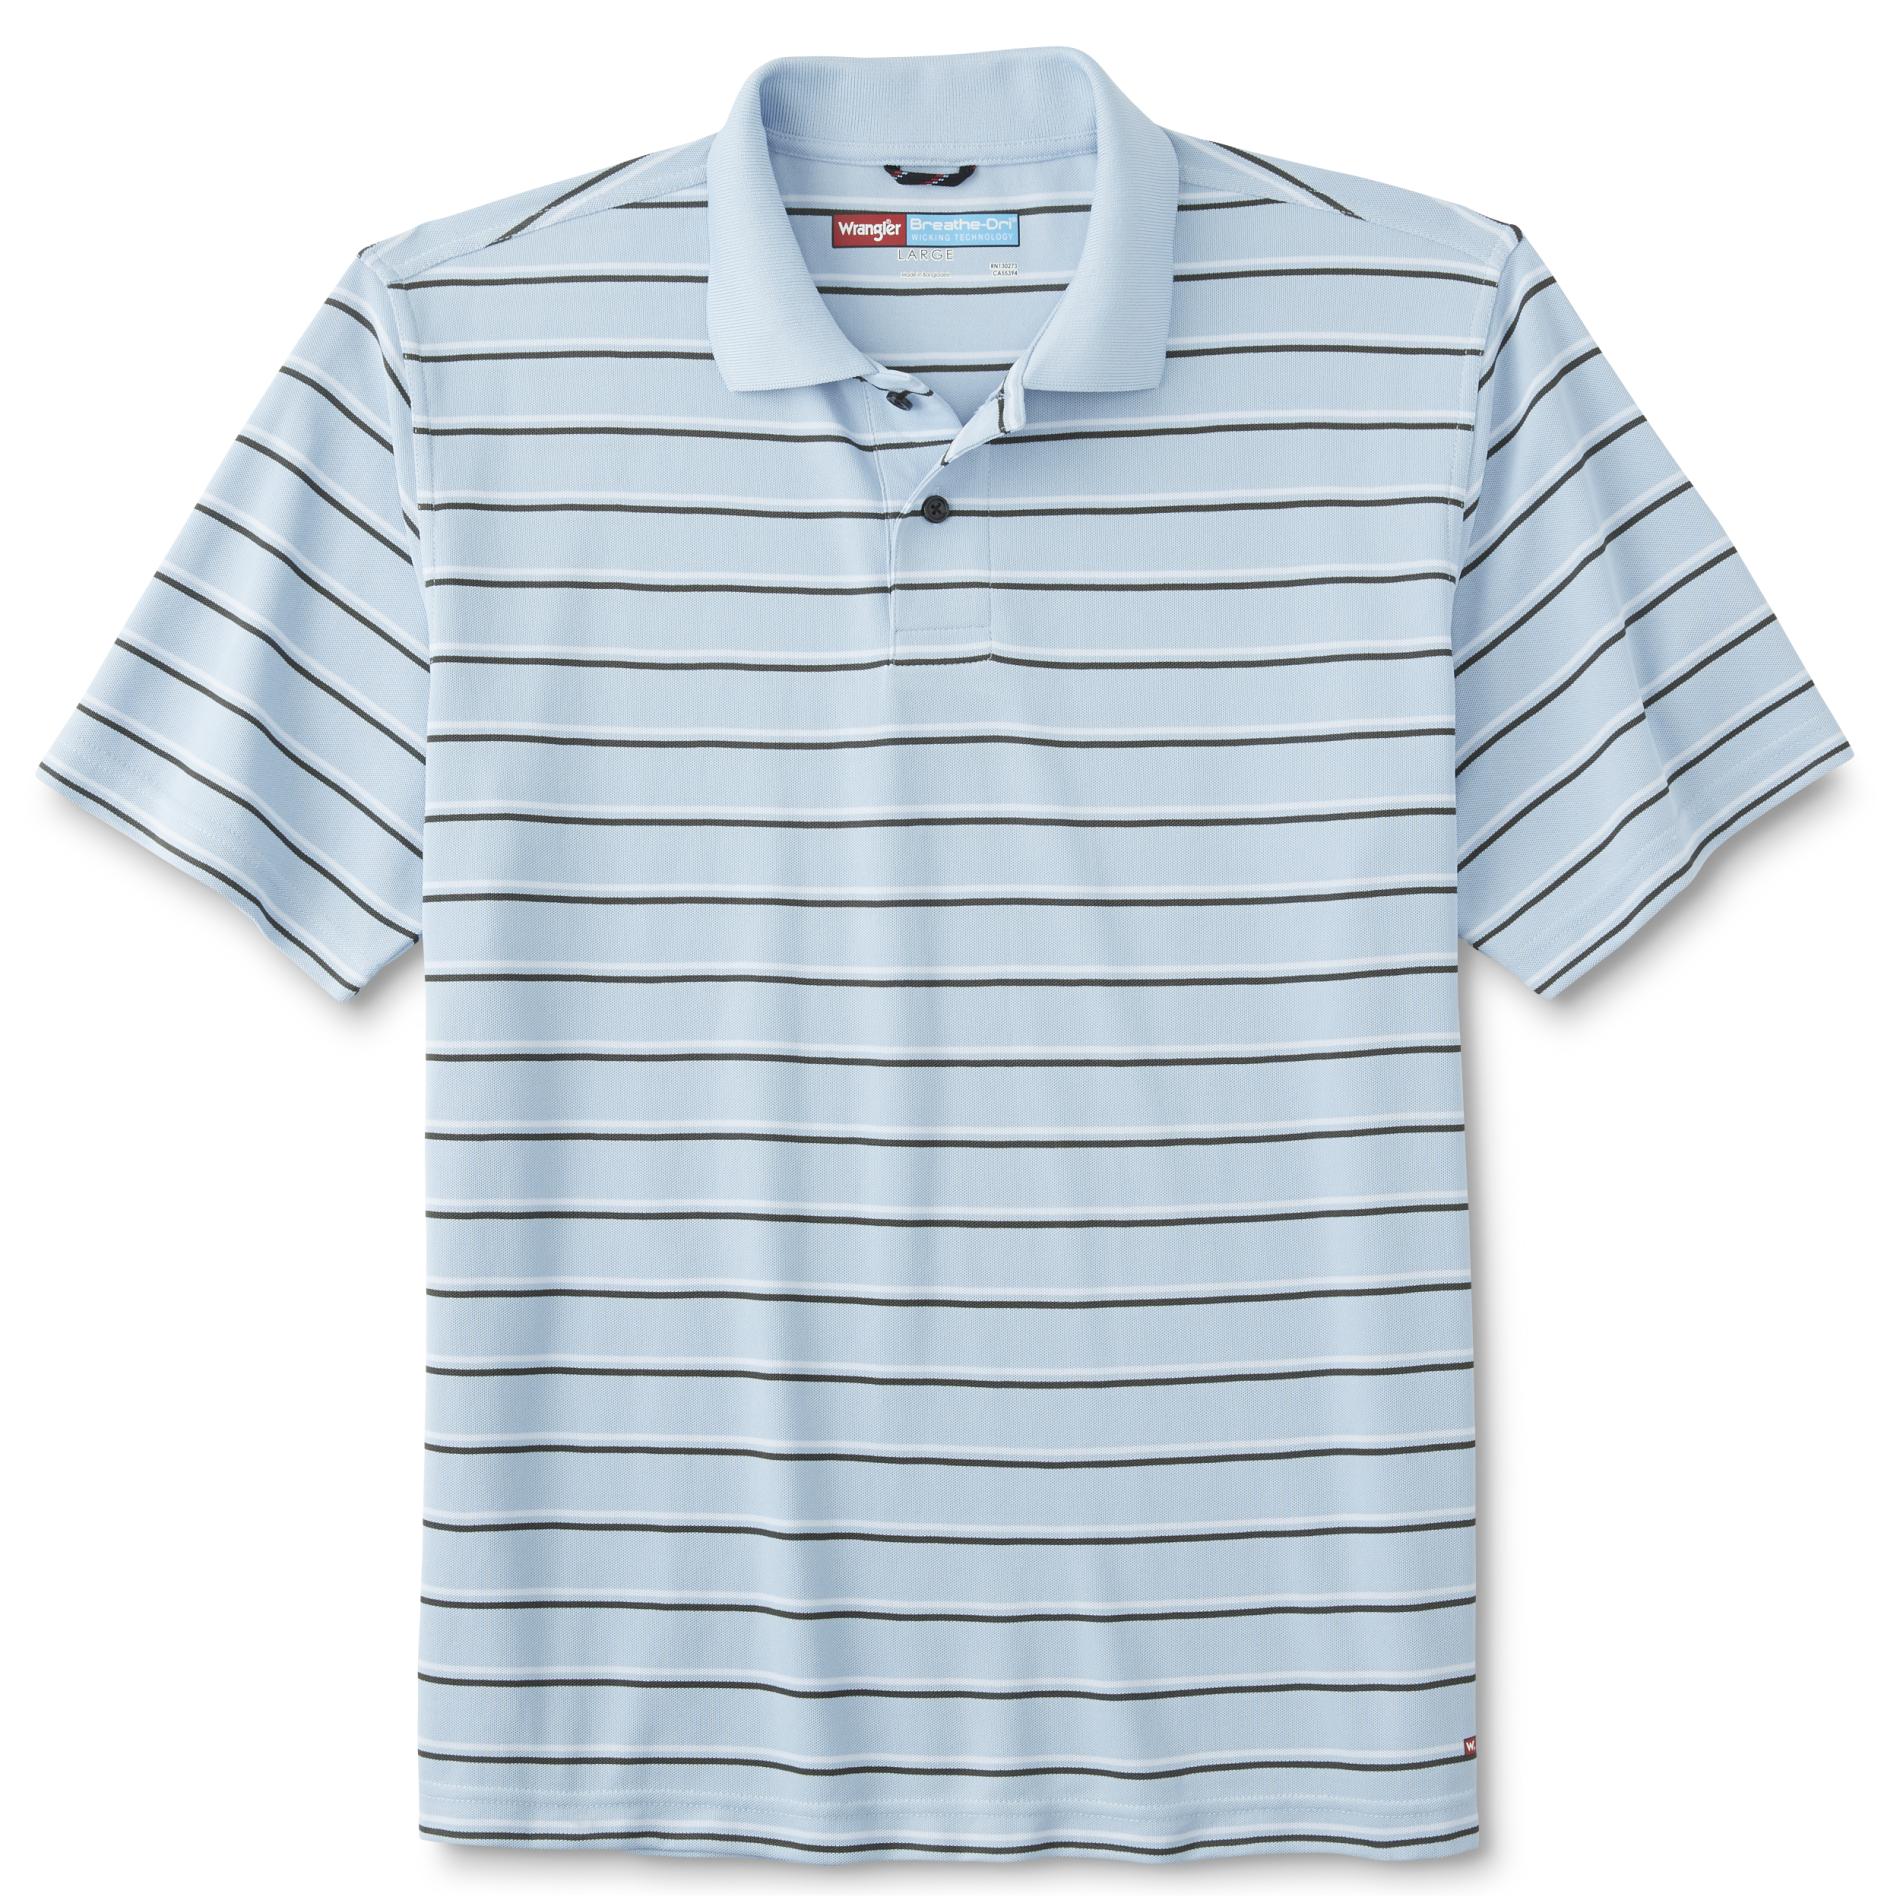 Wrangler Men's Breathe-Dri Polo Shirt - Striped